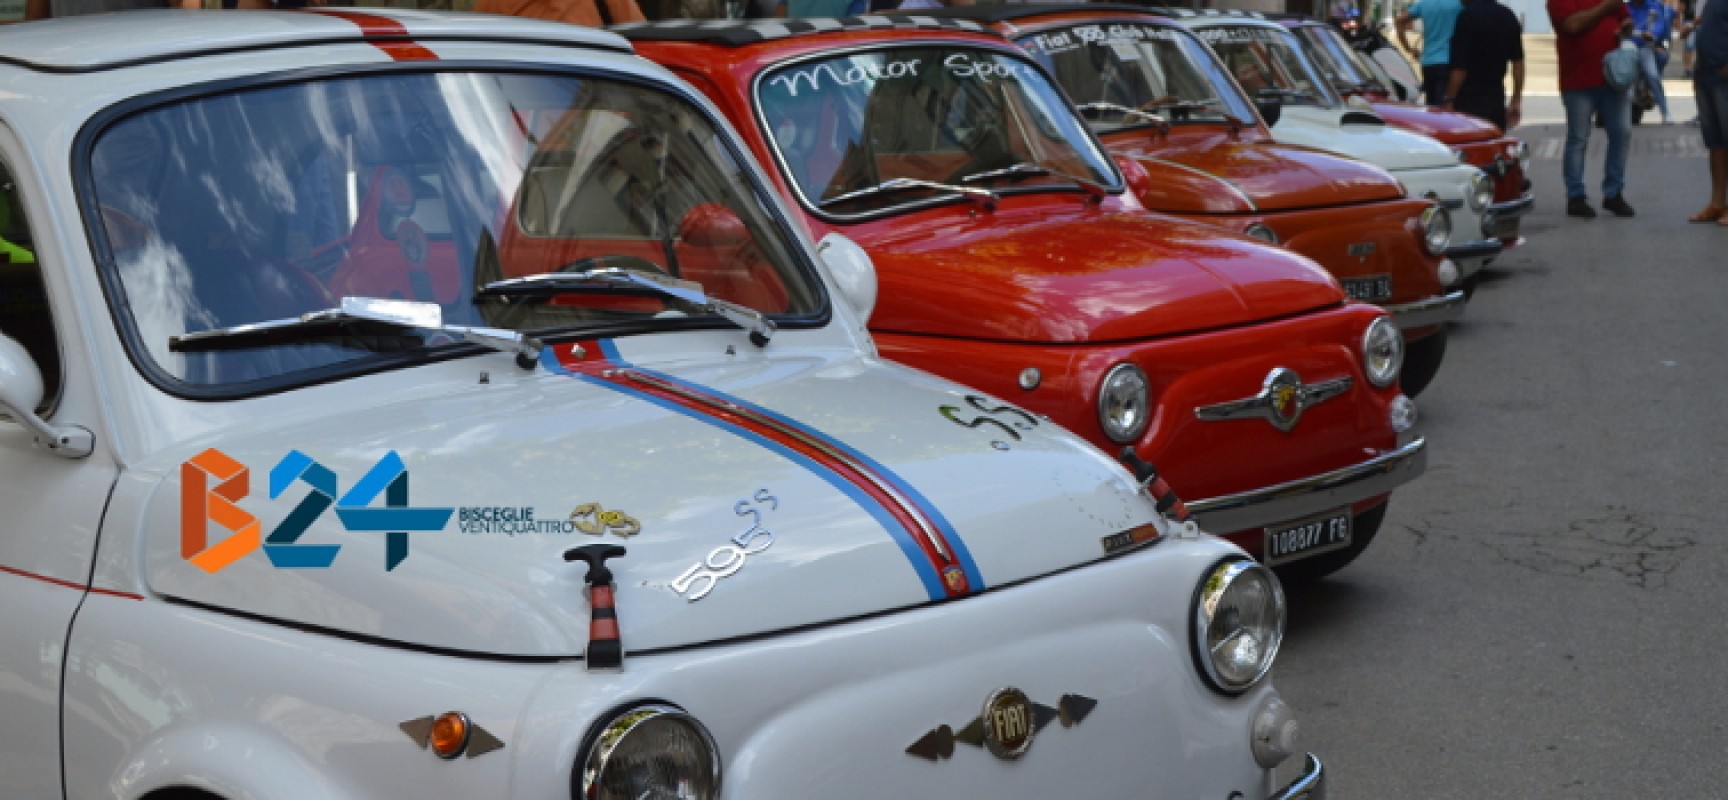 Fiat 500 club, Meeting internazionale del Sud Italia nel weekend